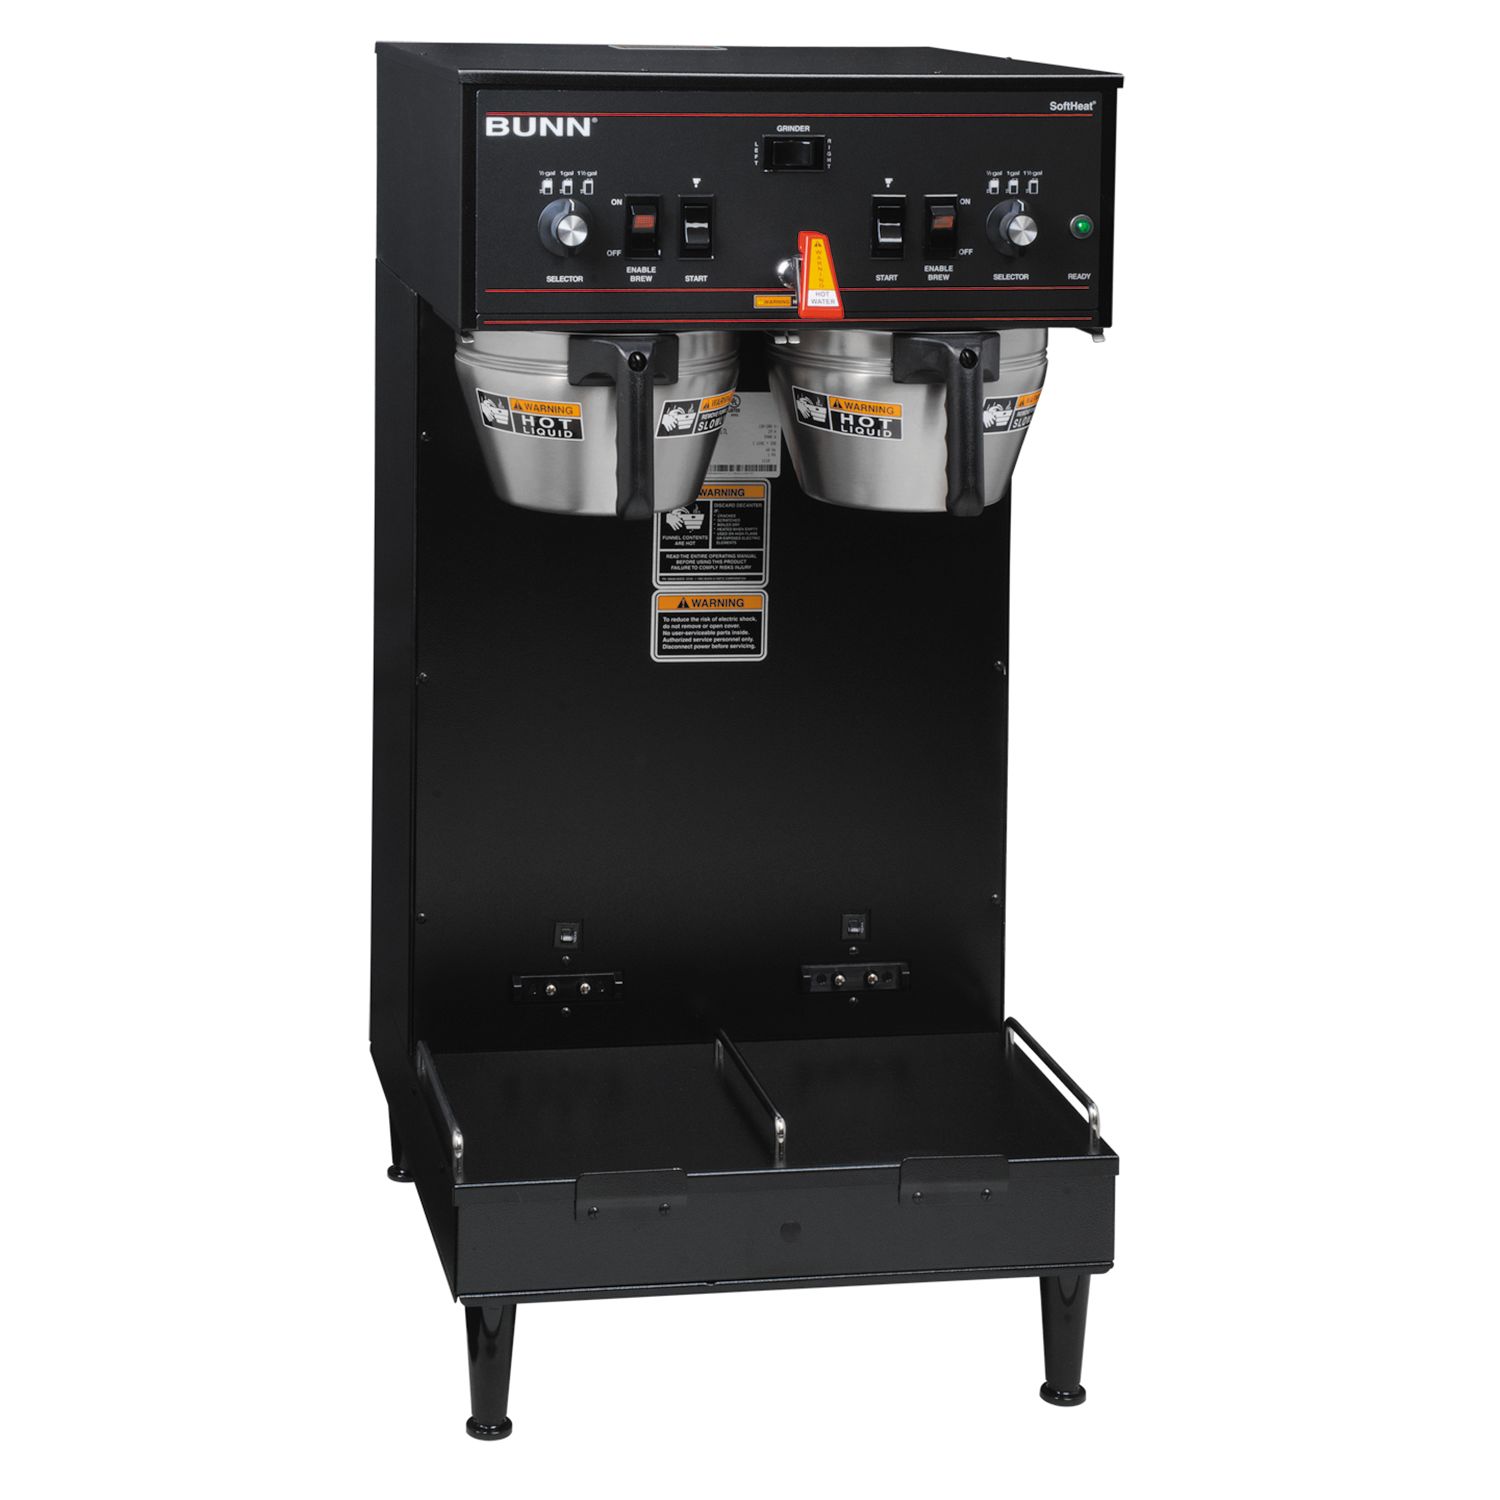 BUNN 27900.0001 Soft Heat® Dual Commercial Coffee Brewer